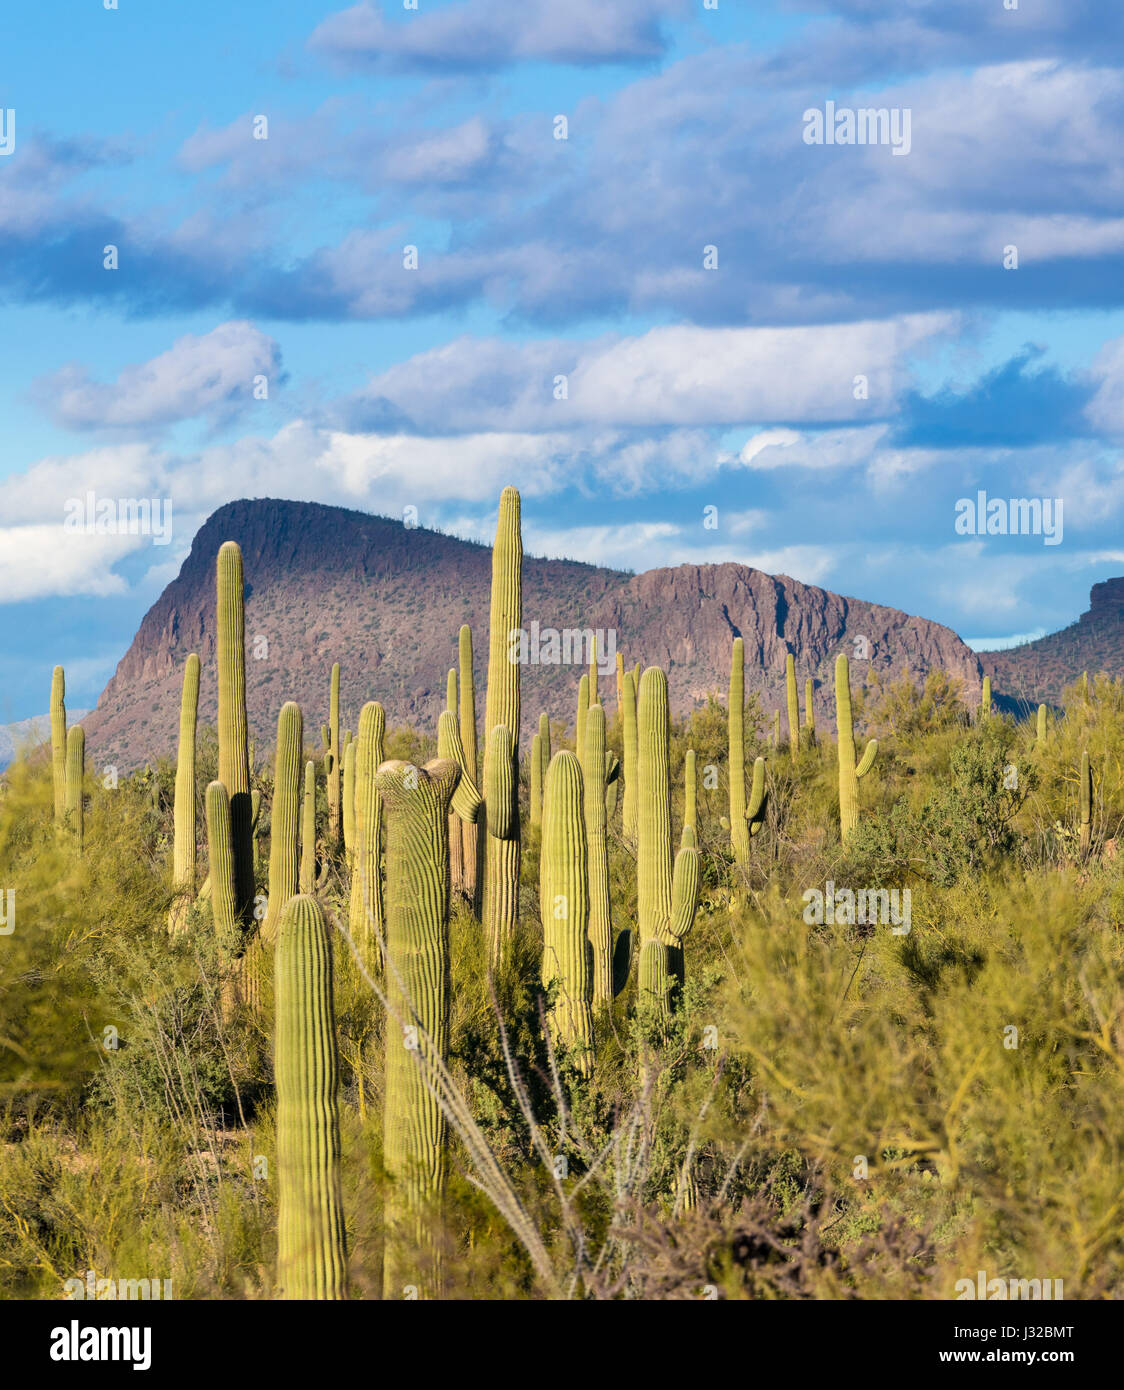 Rare Crested saguaro cactus plant in Saguaro National Park West near Tucson, Arizona desert Stock Photo